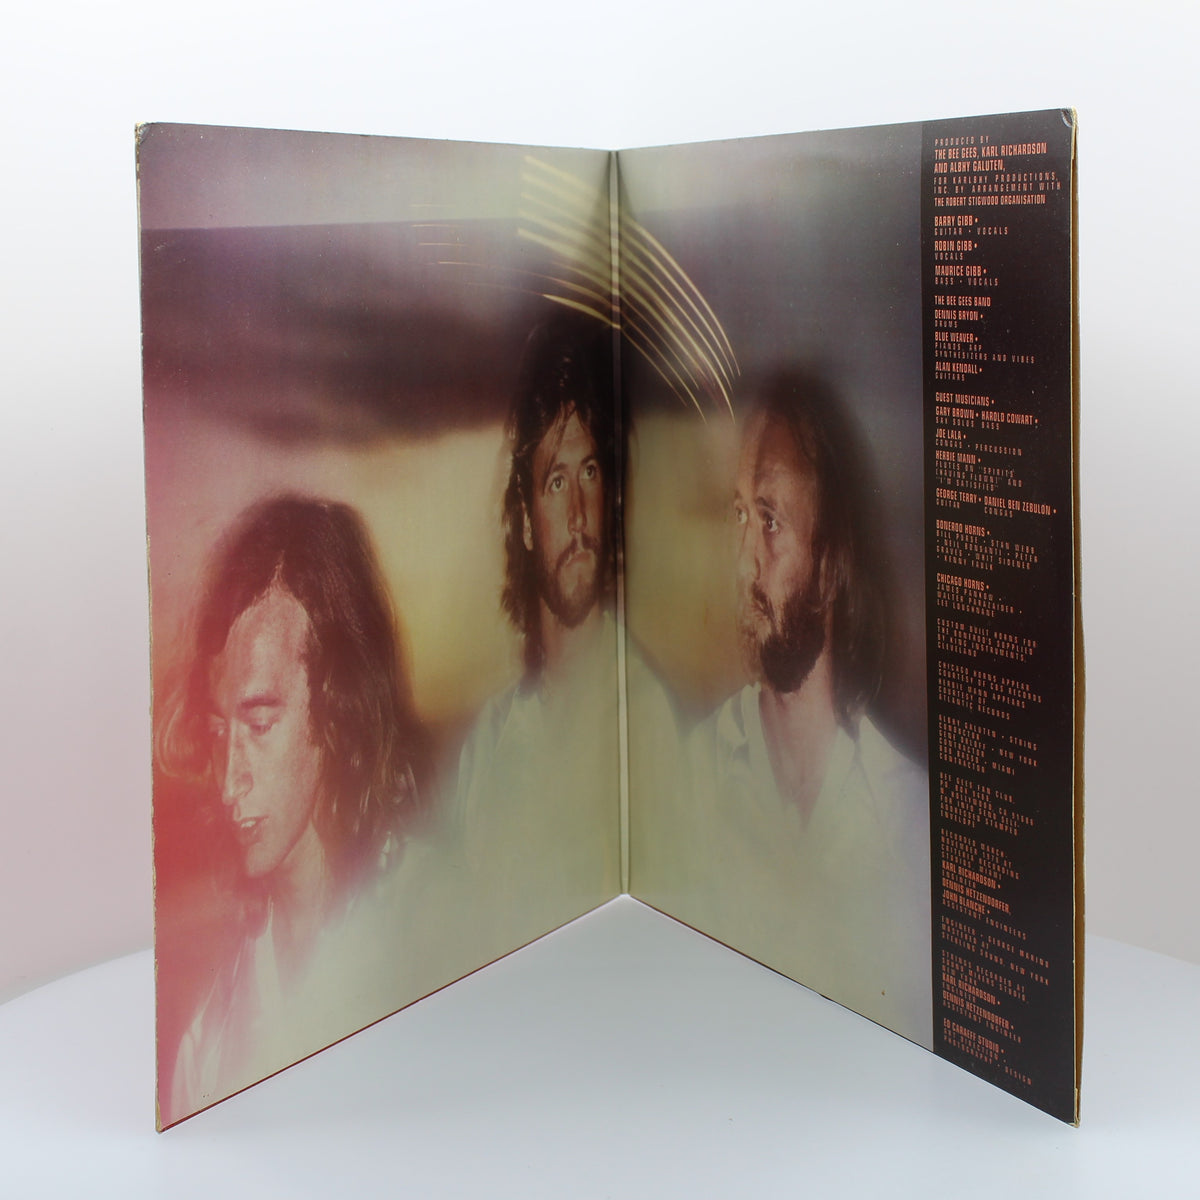 Bee Gees - Spirits Having Flown, Vinyl LP Album 33Rpm Promo &quot;Not For Sale&quot;, Portugal 1979